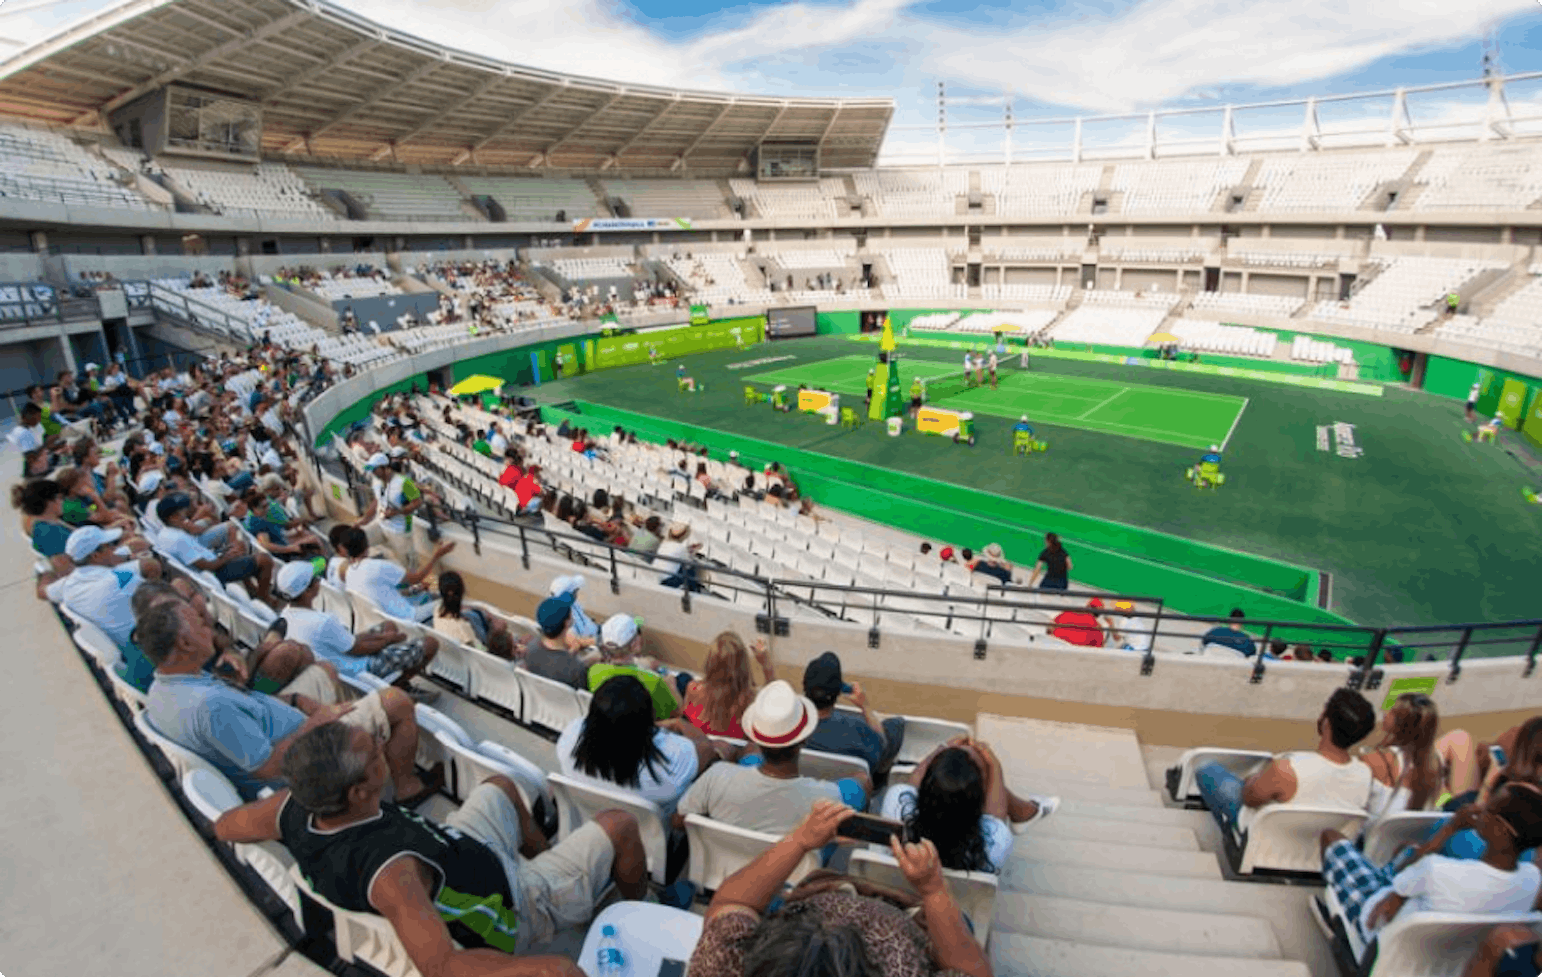 Tennis centre. Олимпийский теннисный центр Рио де Жанейро. Рио Олимпик центр теннис. Теннисный стадион Рио де Жанейро 2016. Олимпийский зелёный теннисный центр.